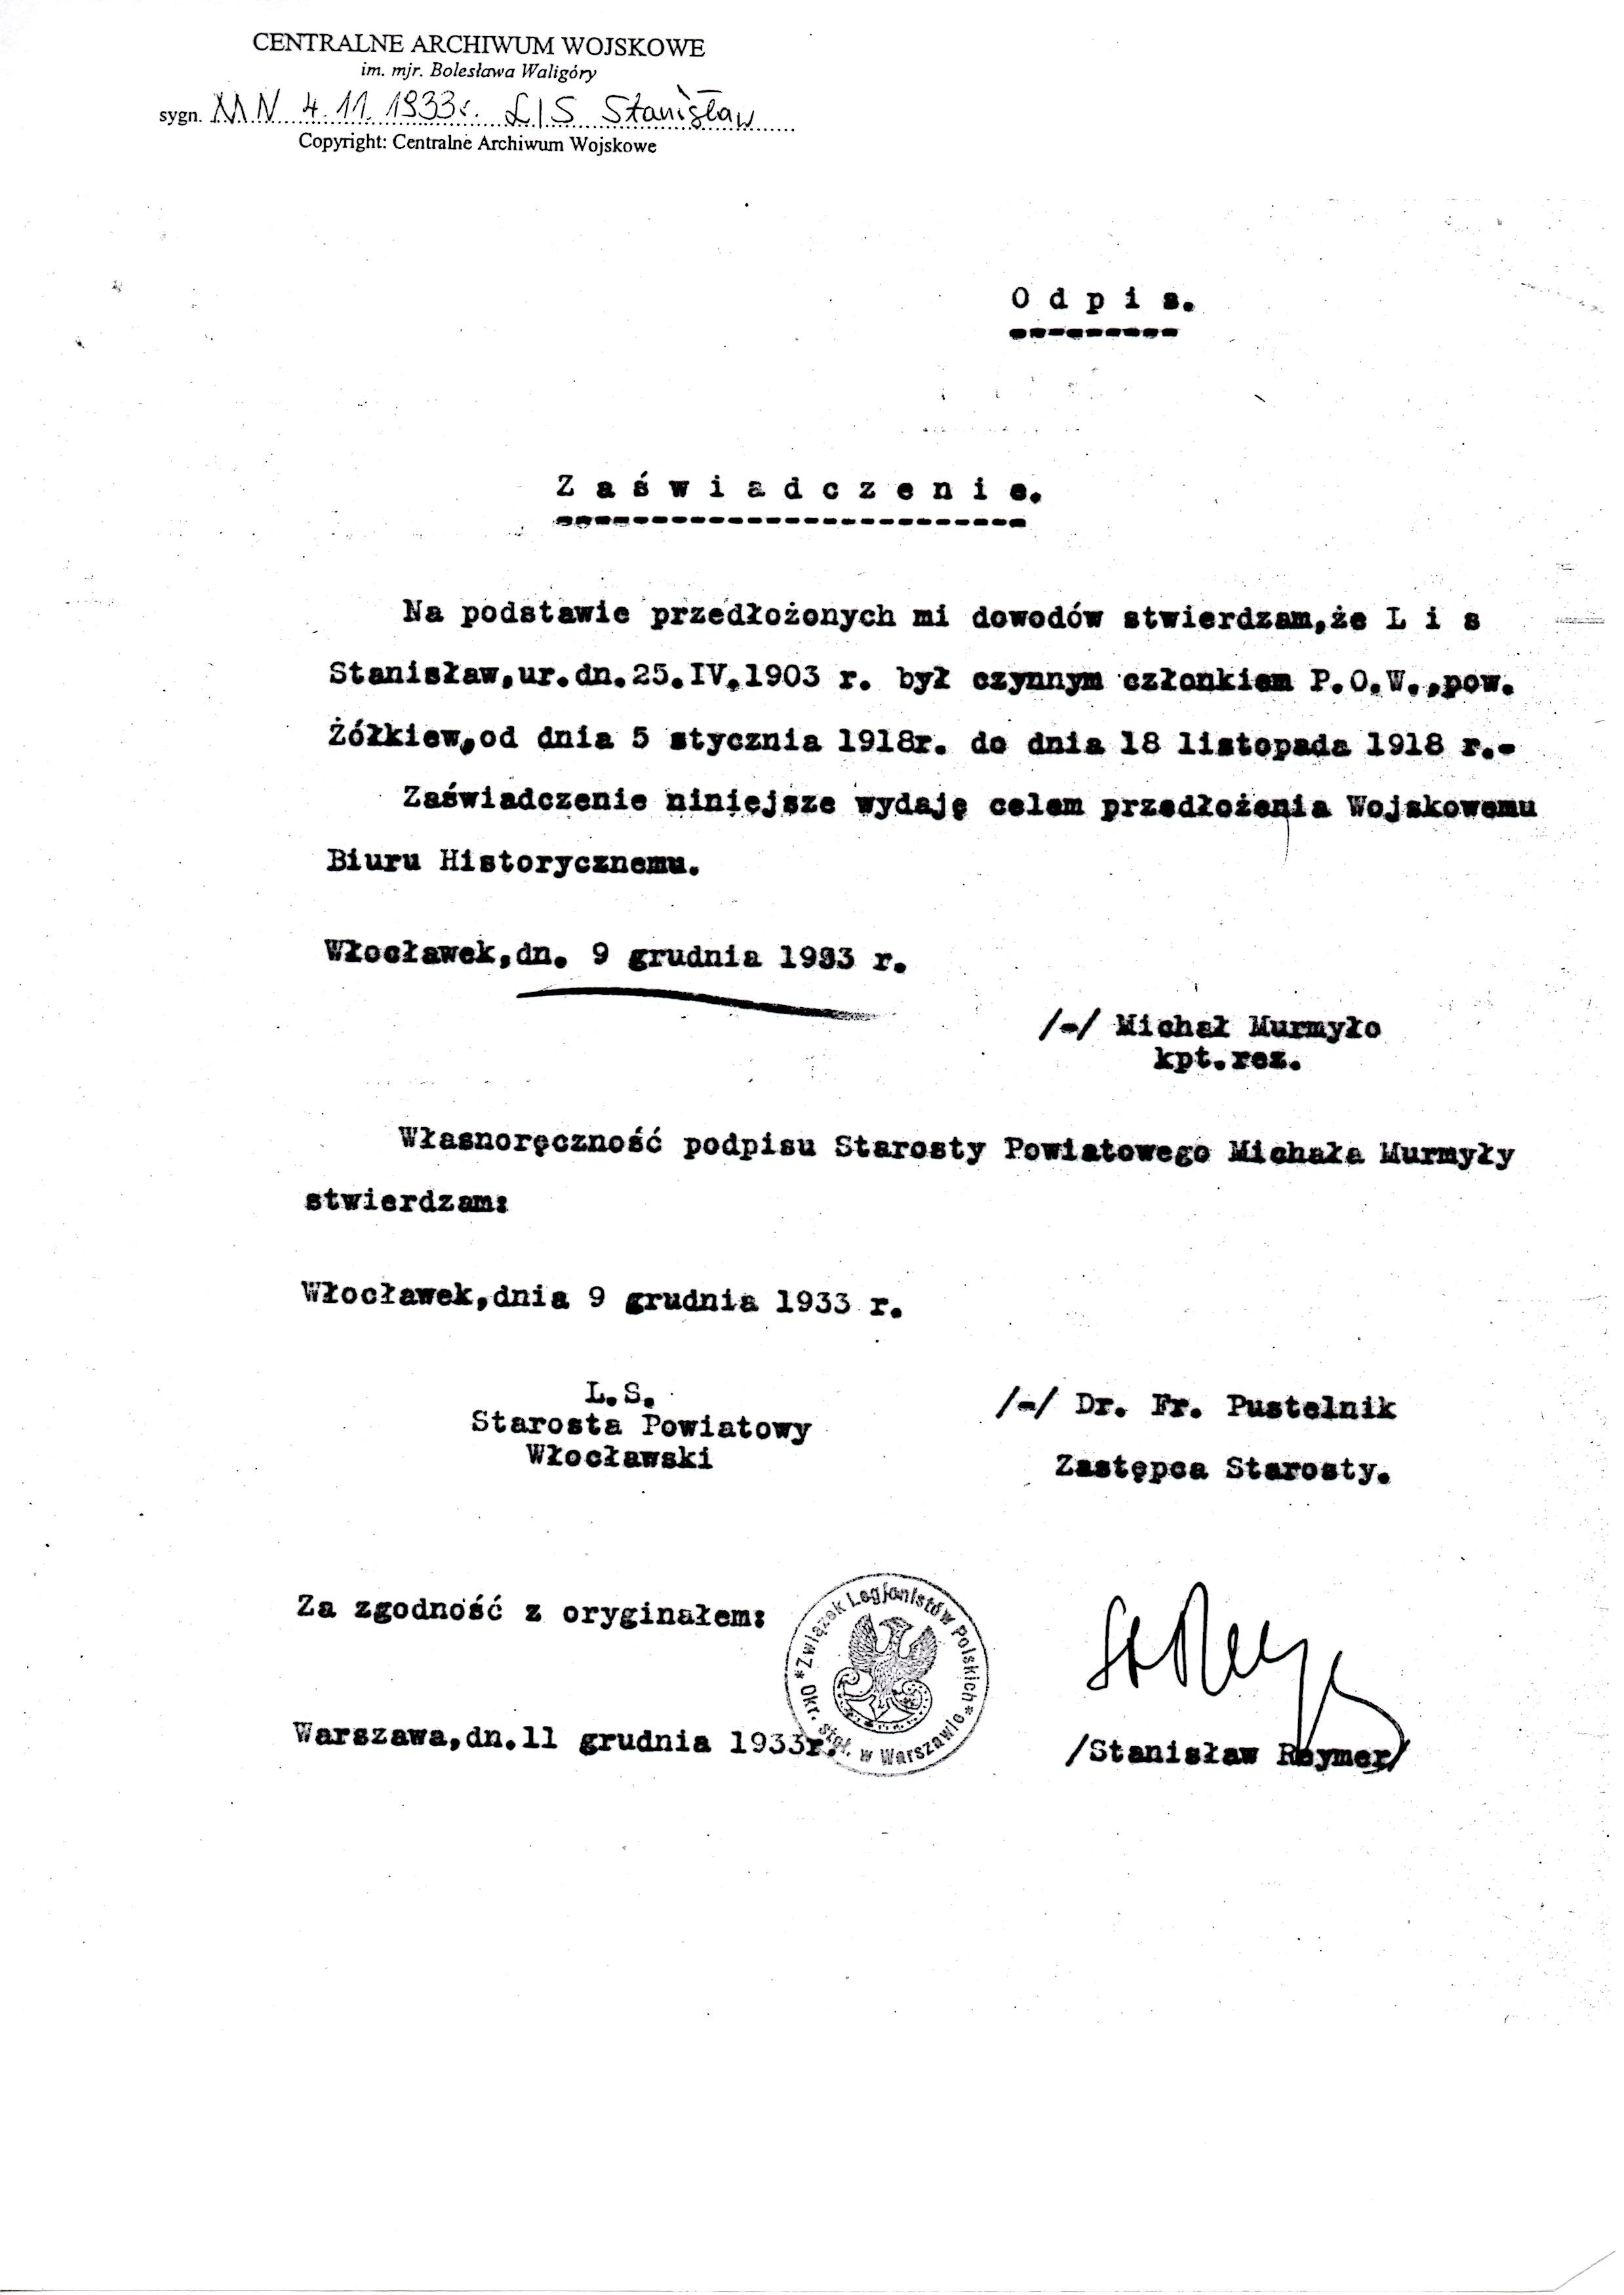 Stanislaw Lis Temporary certificate 1 1933.jpg